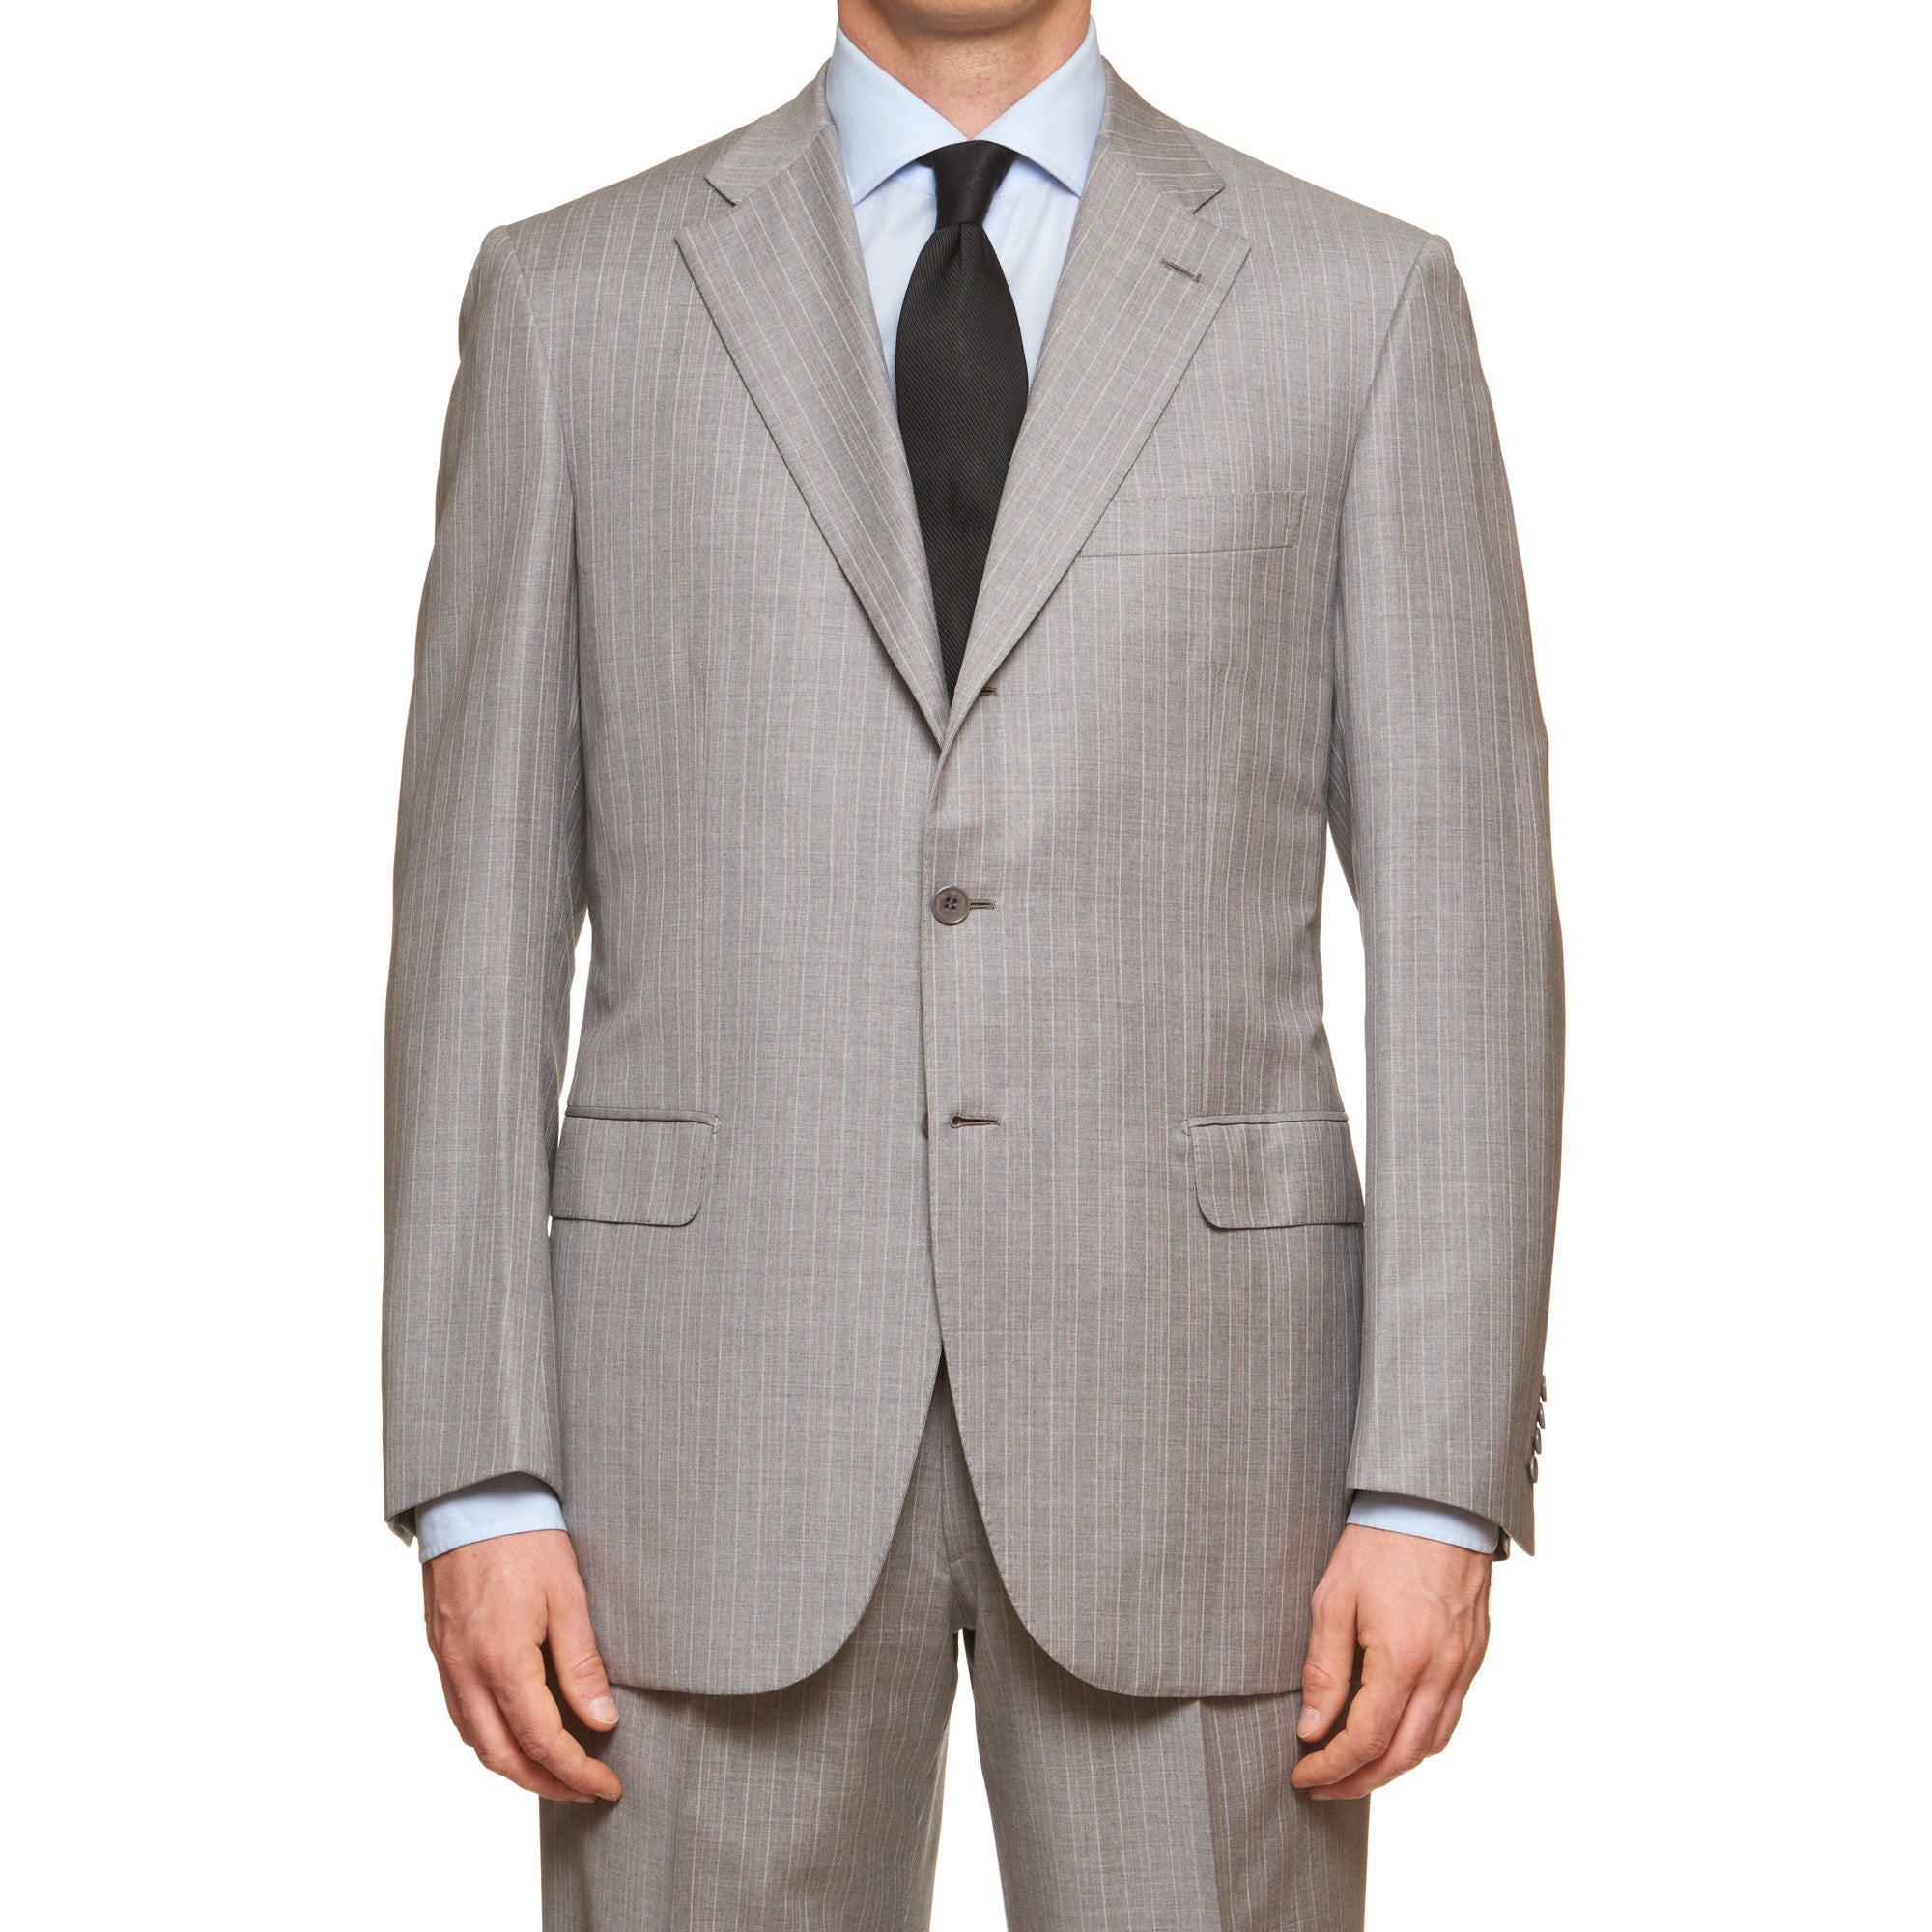 BRIONI "CHIGI" Handmade Gray Striped Wool Suit EU 52 NEW US 42 BRIONI